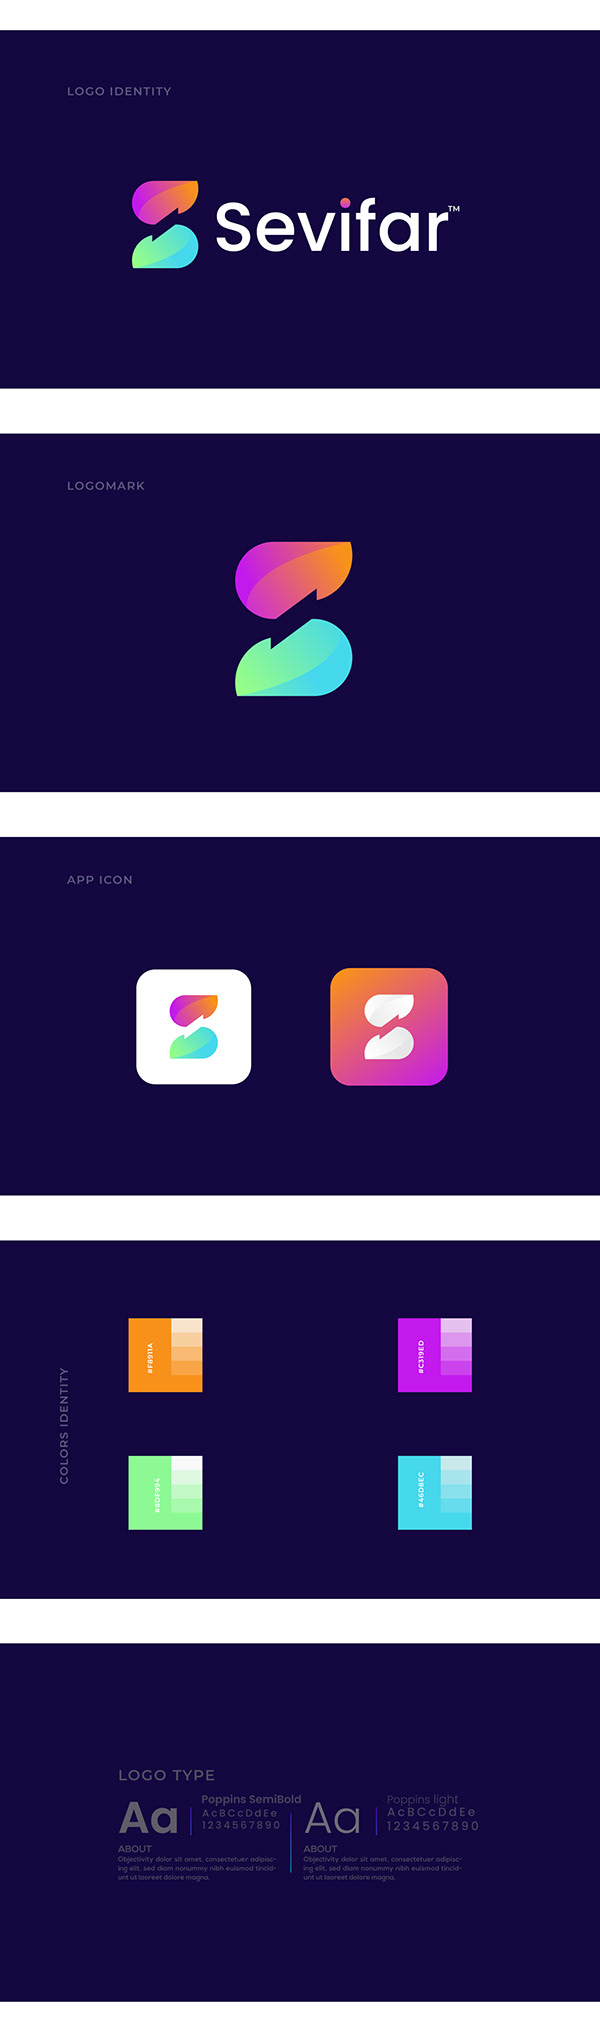 branding brand identity, Sevifar logo, App icon design